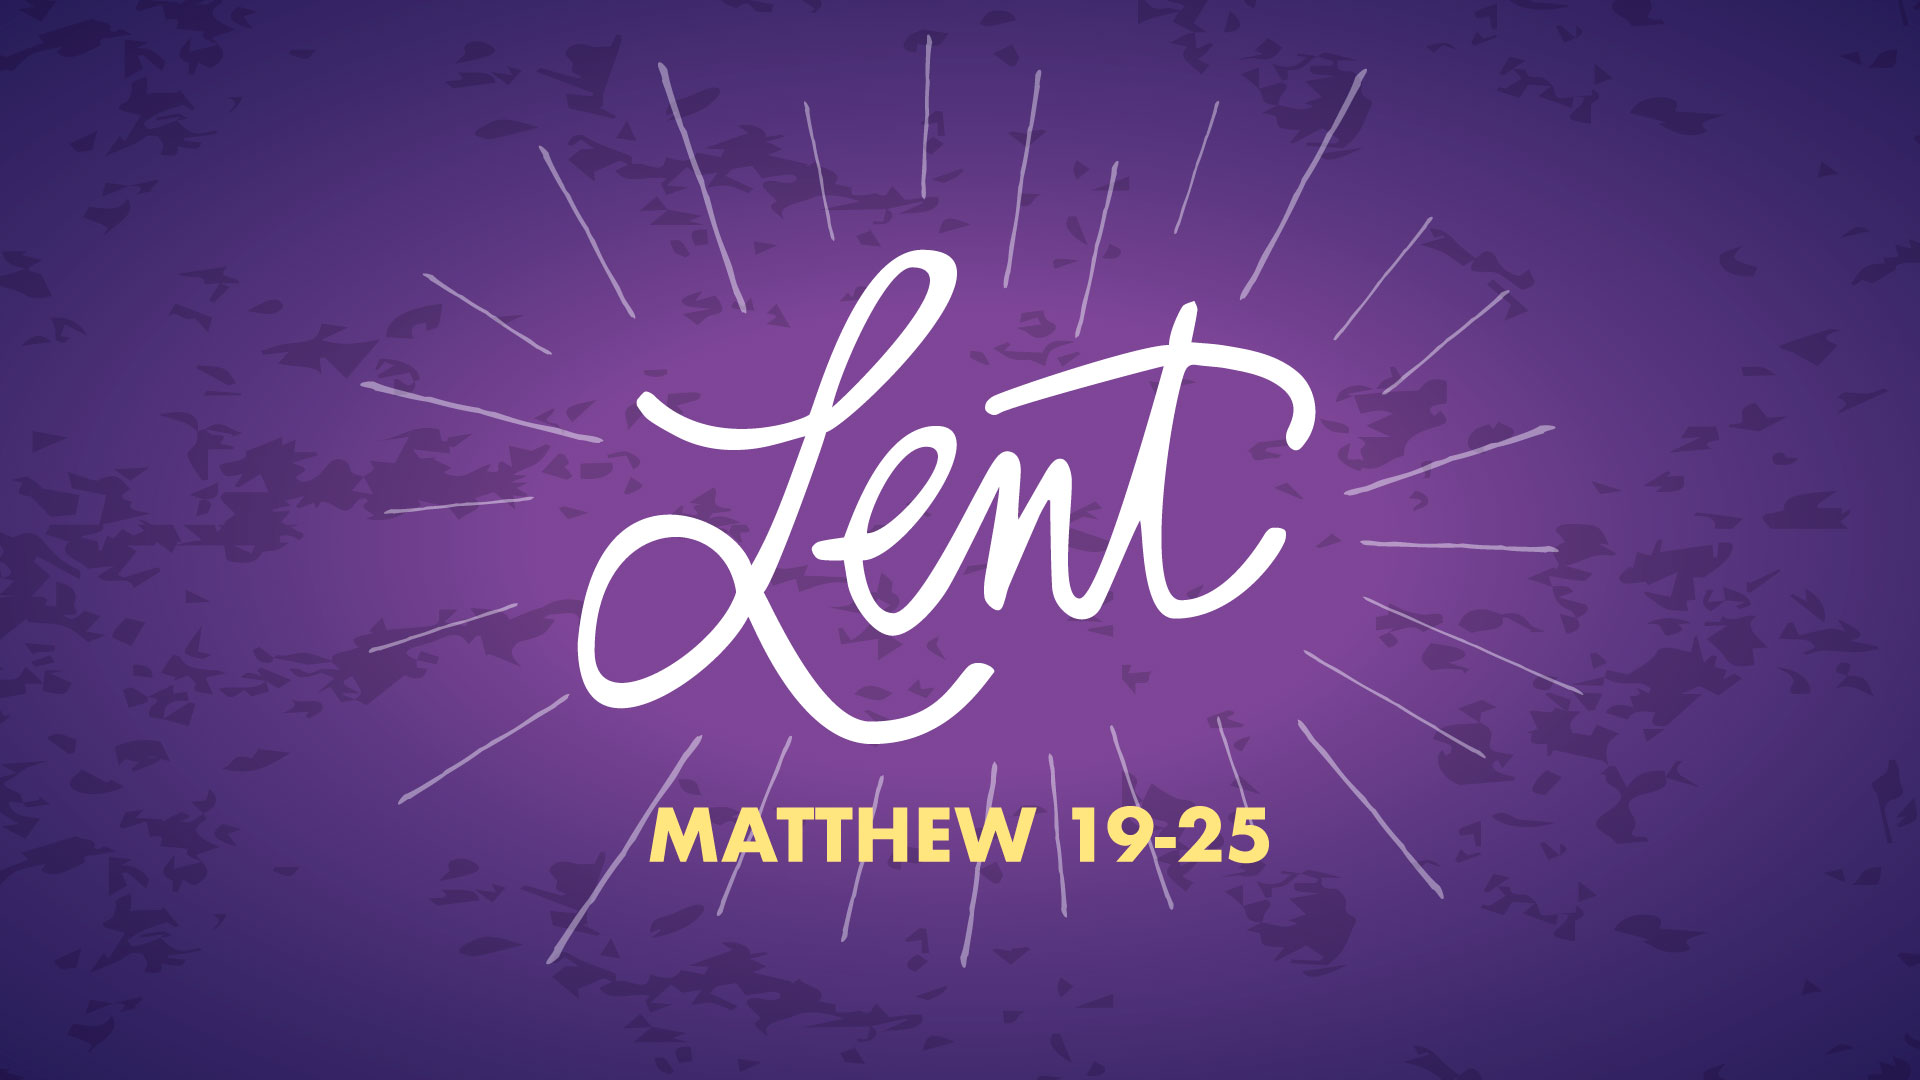 Lent: Matthew 19-25